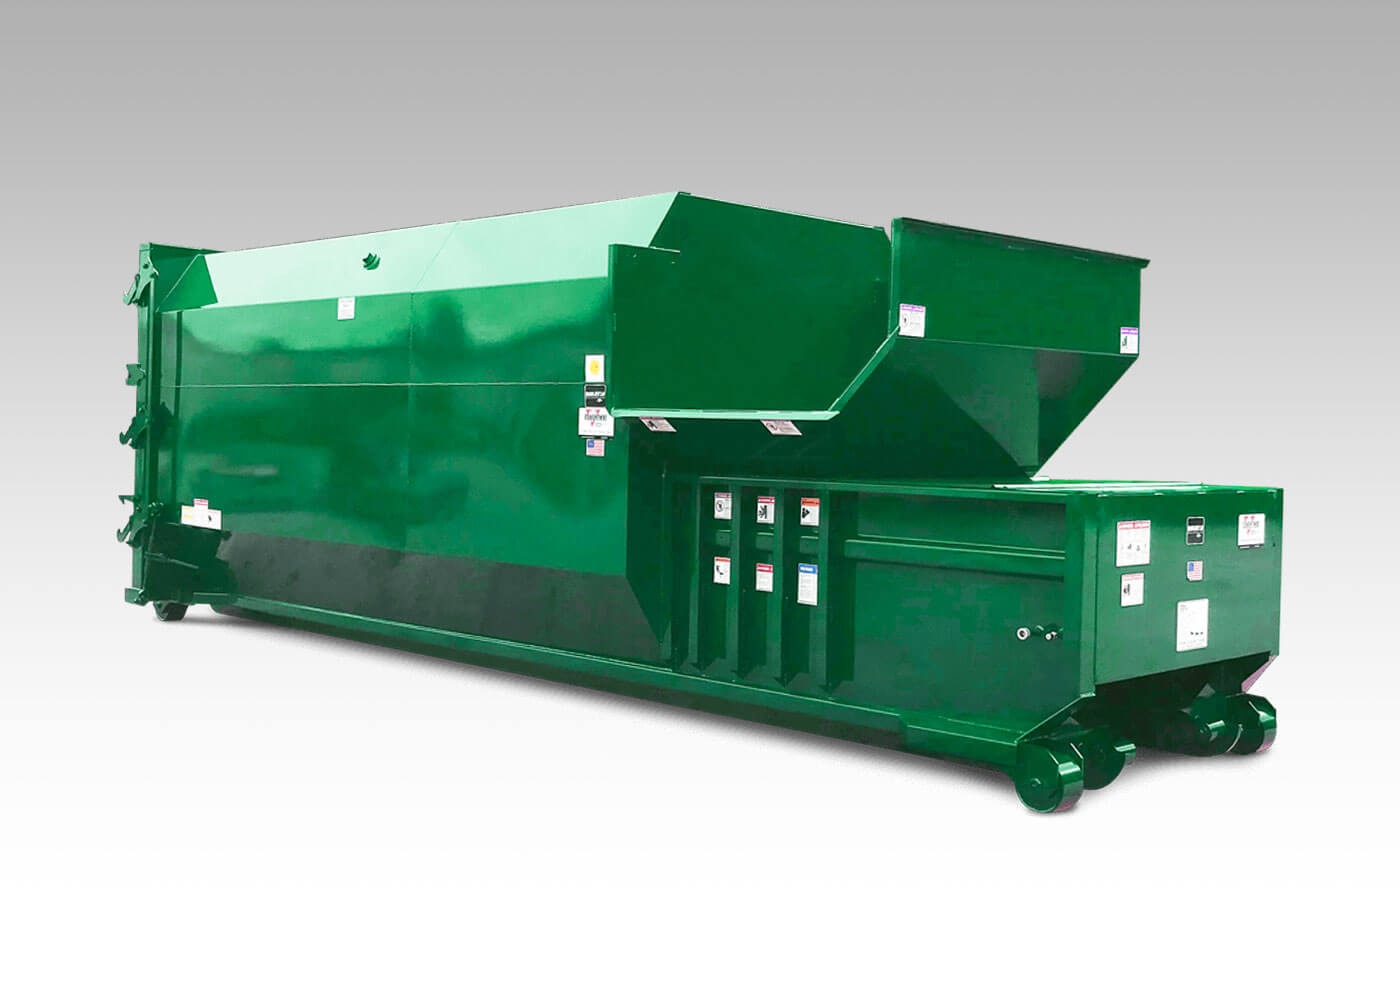 Marathon Rj-100 self contained trash compactors for commercial waste compaction